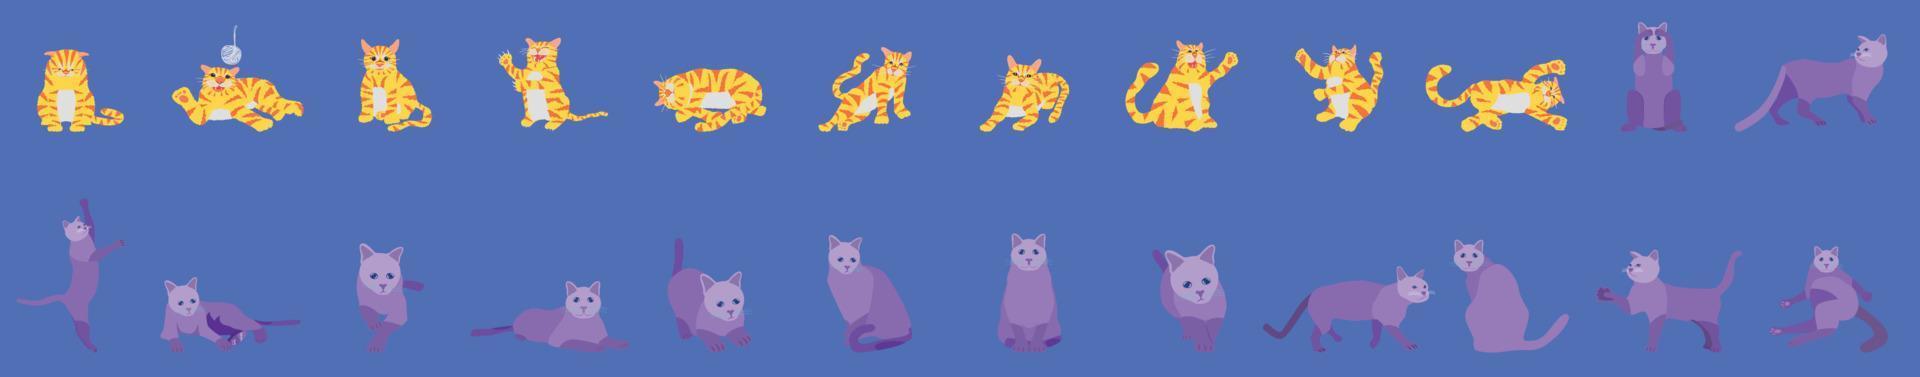 conjunto de animal de pose diferente de gato bonito. ilustração vetorial eps10 vetor